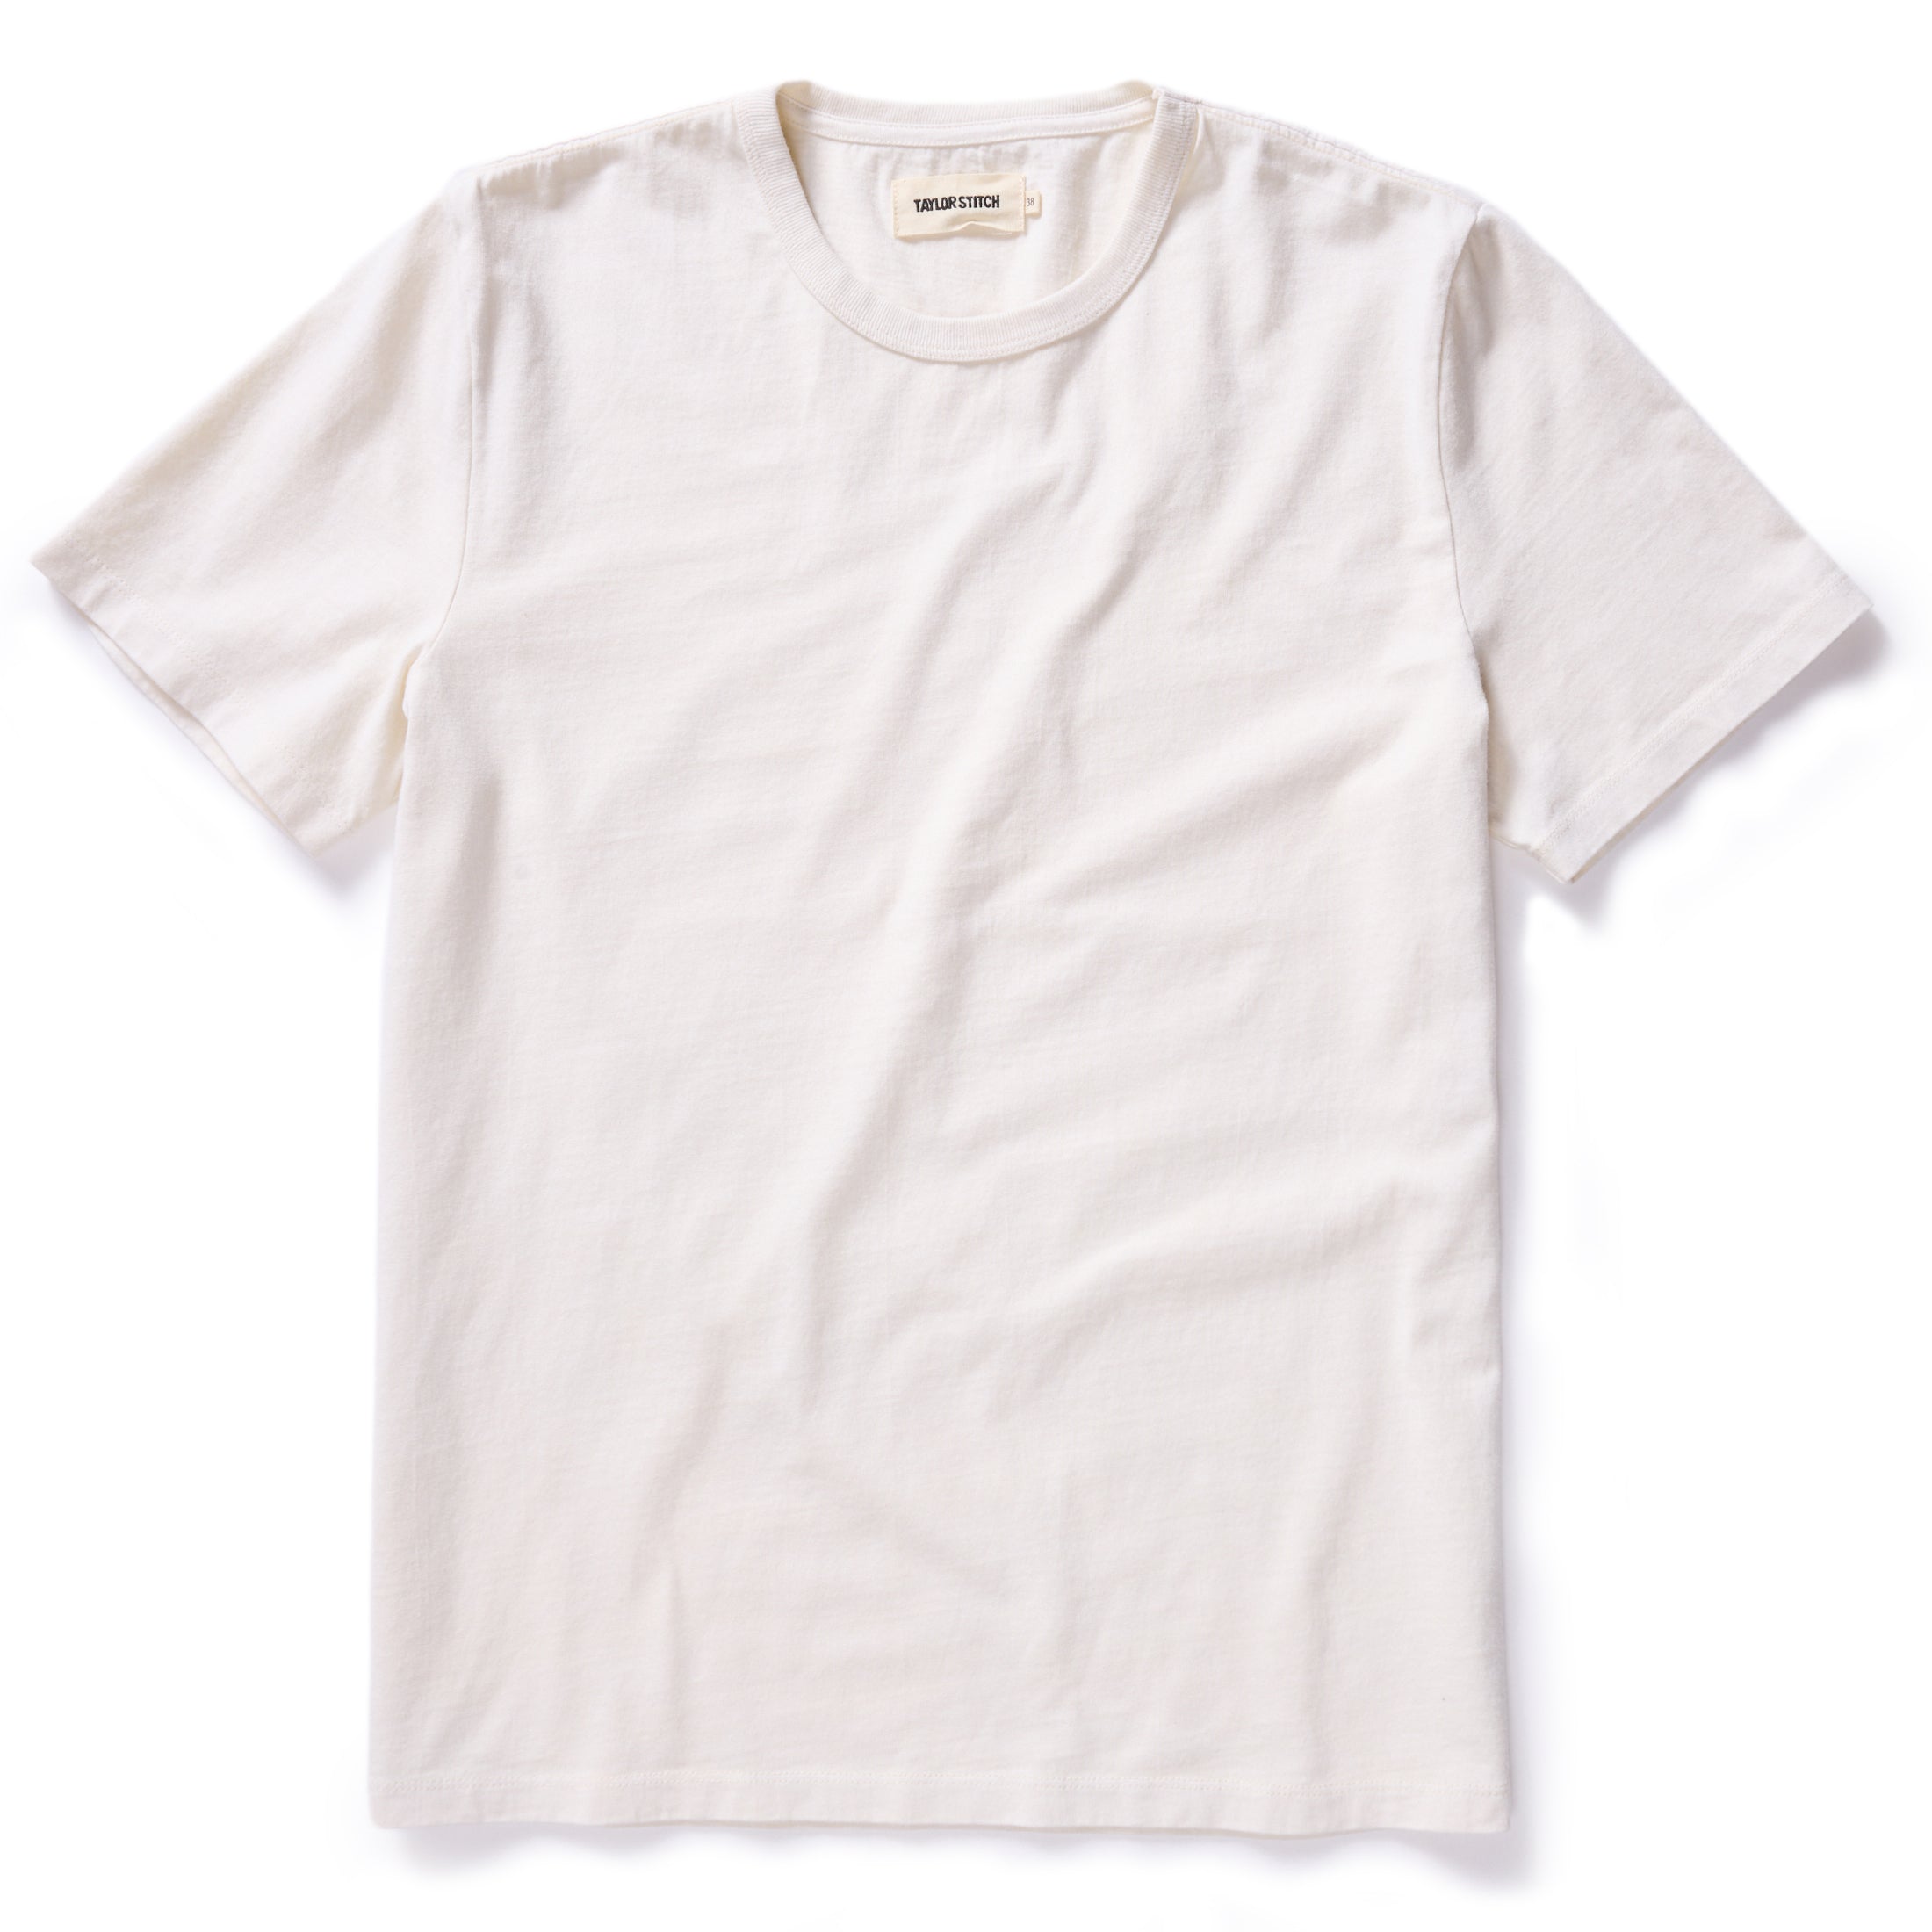 The Organic Cotton Men's T-Shirt in Vintage White